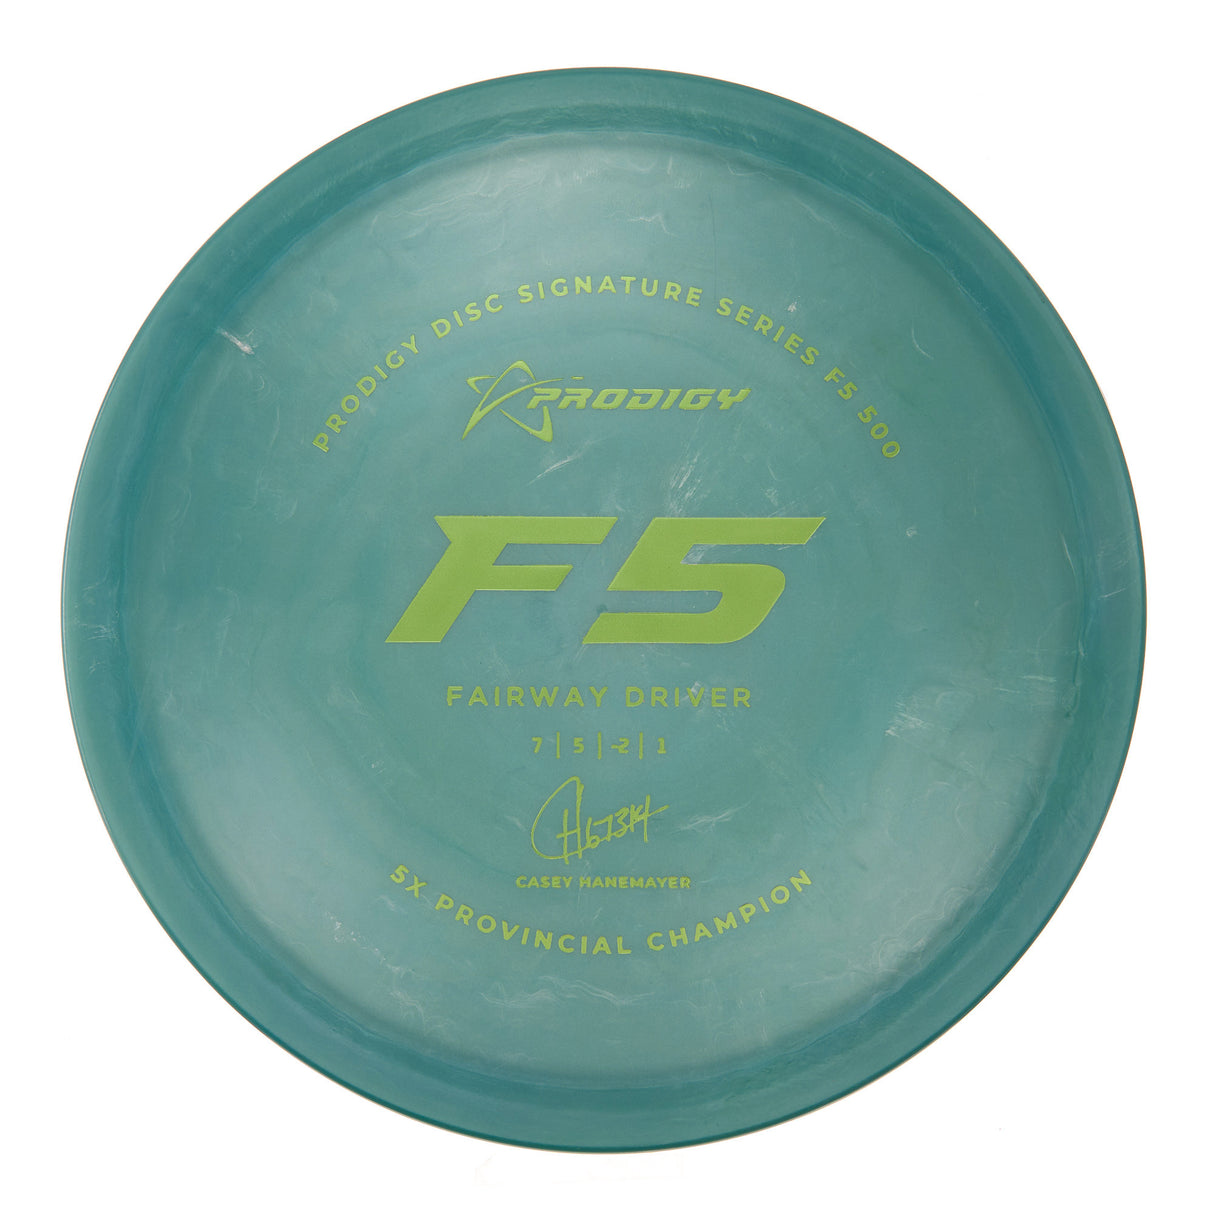 Prodigy F5 - Casey Hanemayer Signature Series 500 176g | Style 0007